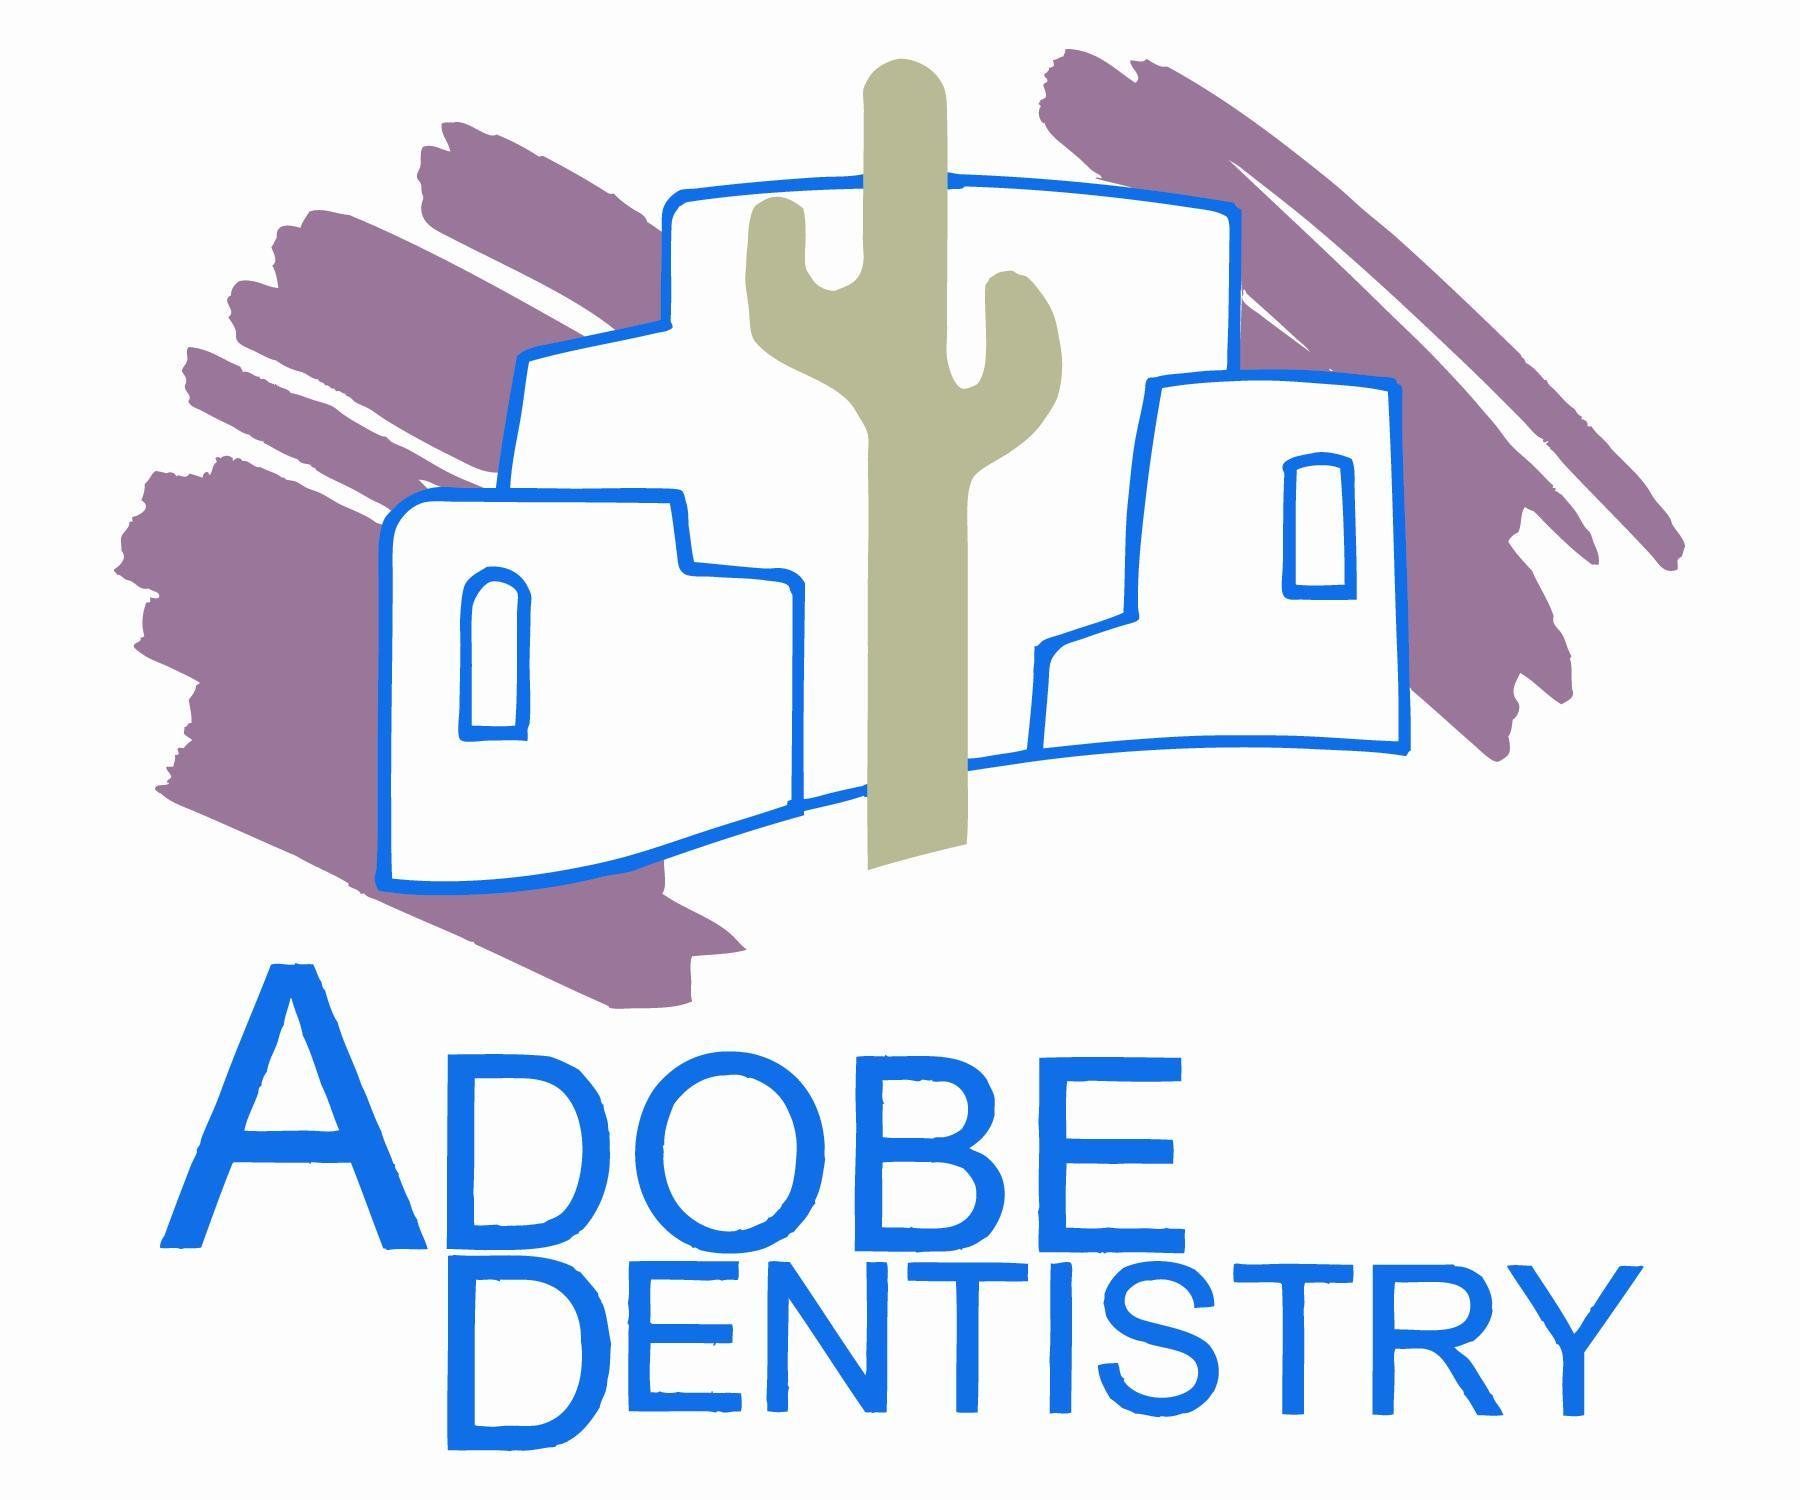 Adobe Dentistry